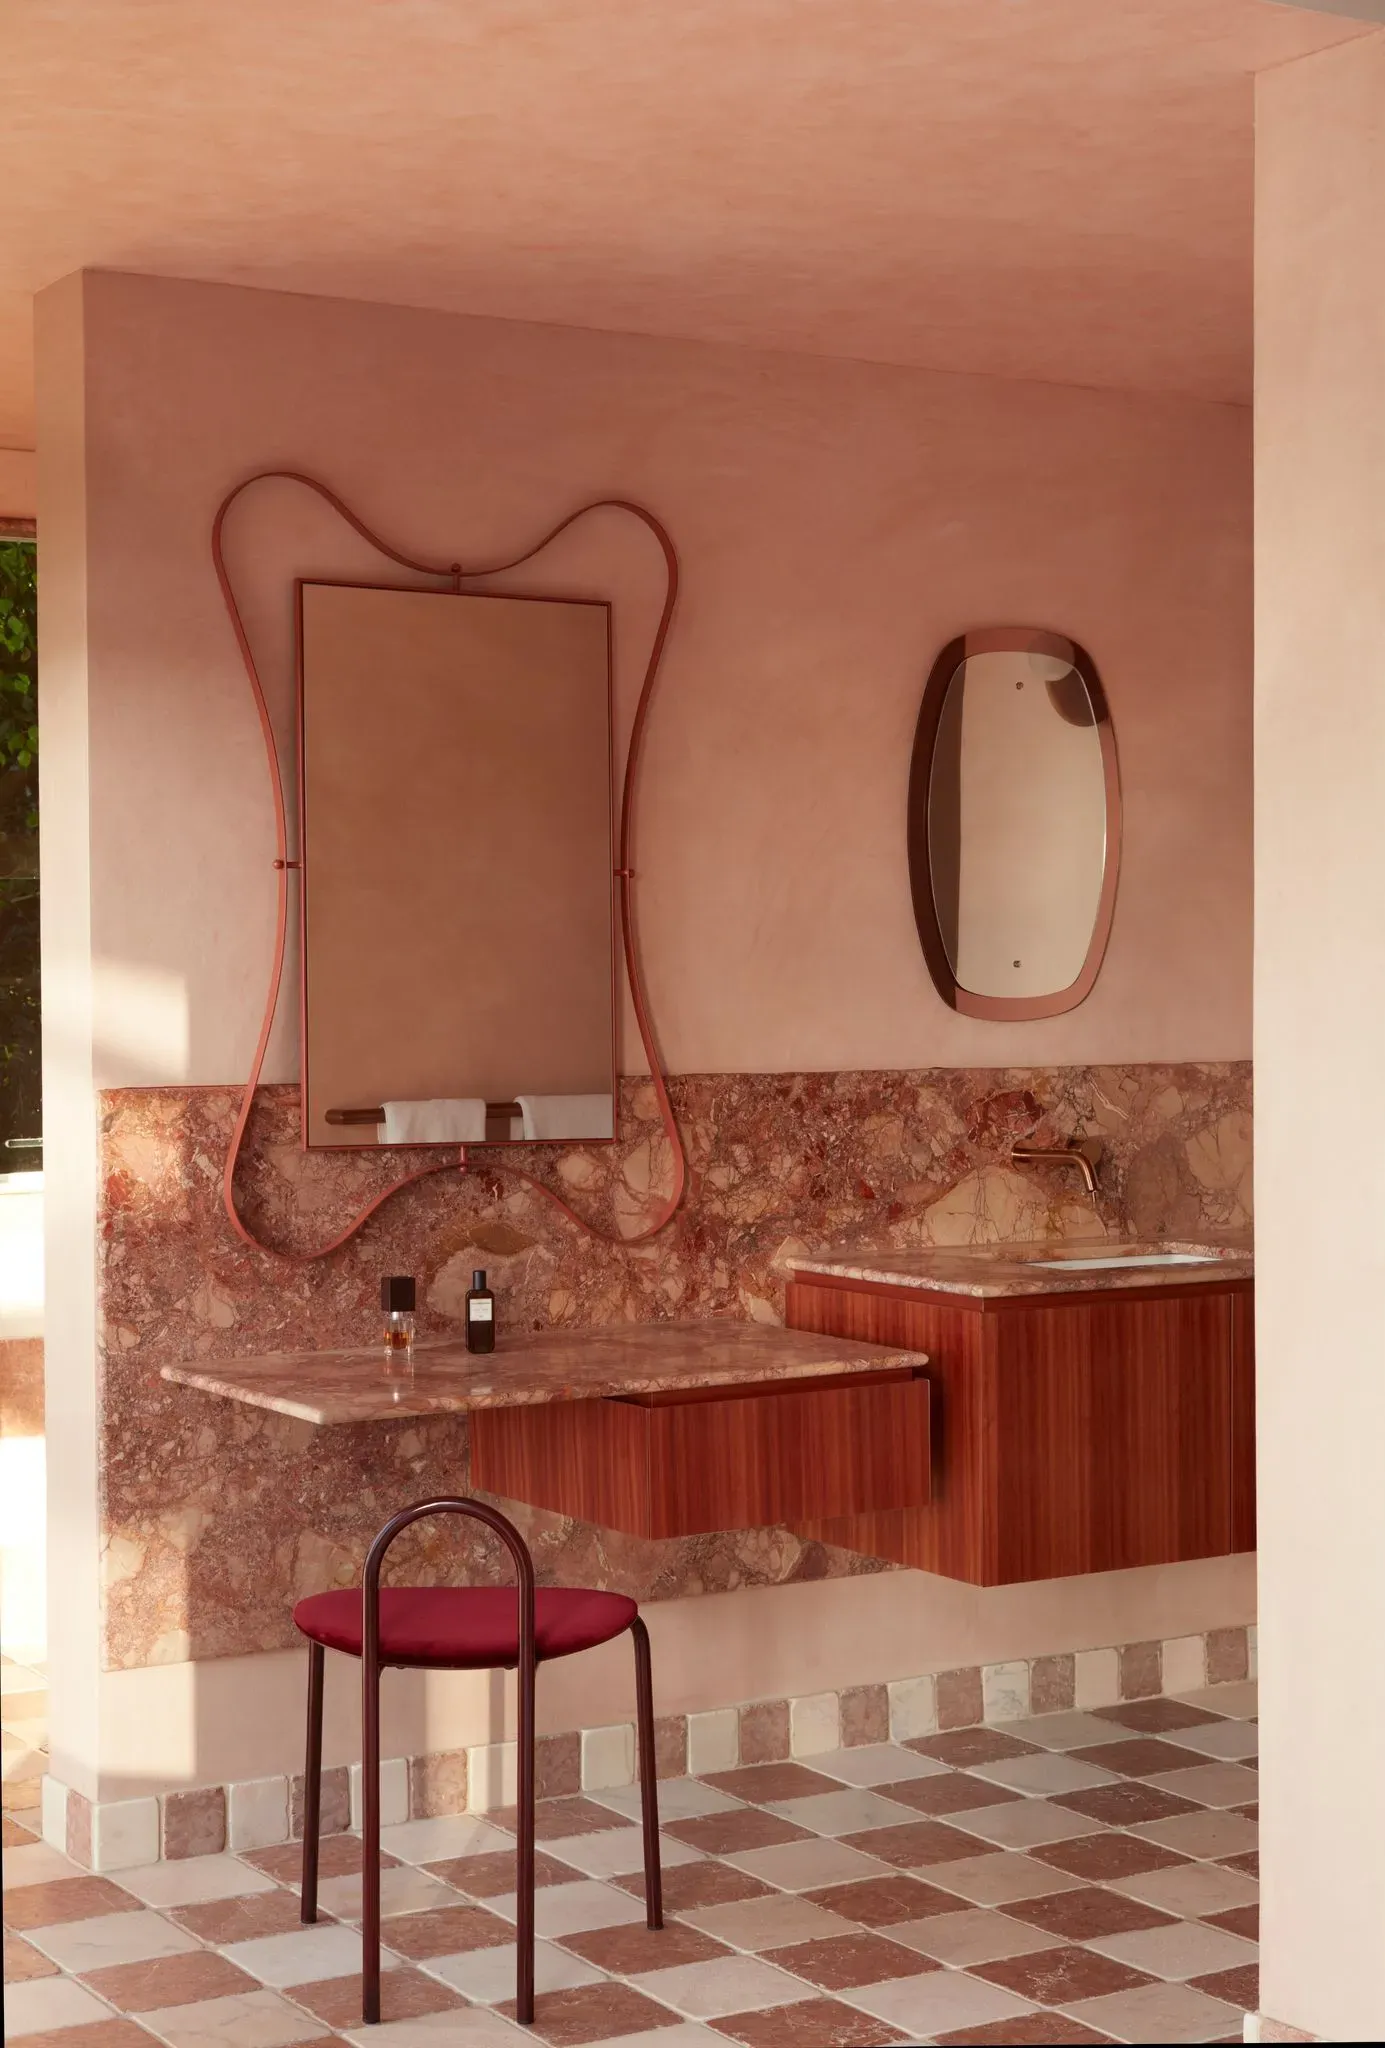 La Palma by YSG Studio. Ciew into power room, featuring custom marble basin.